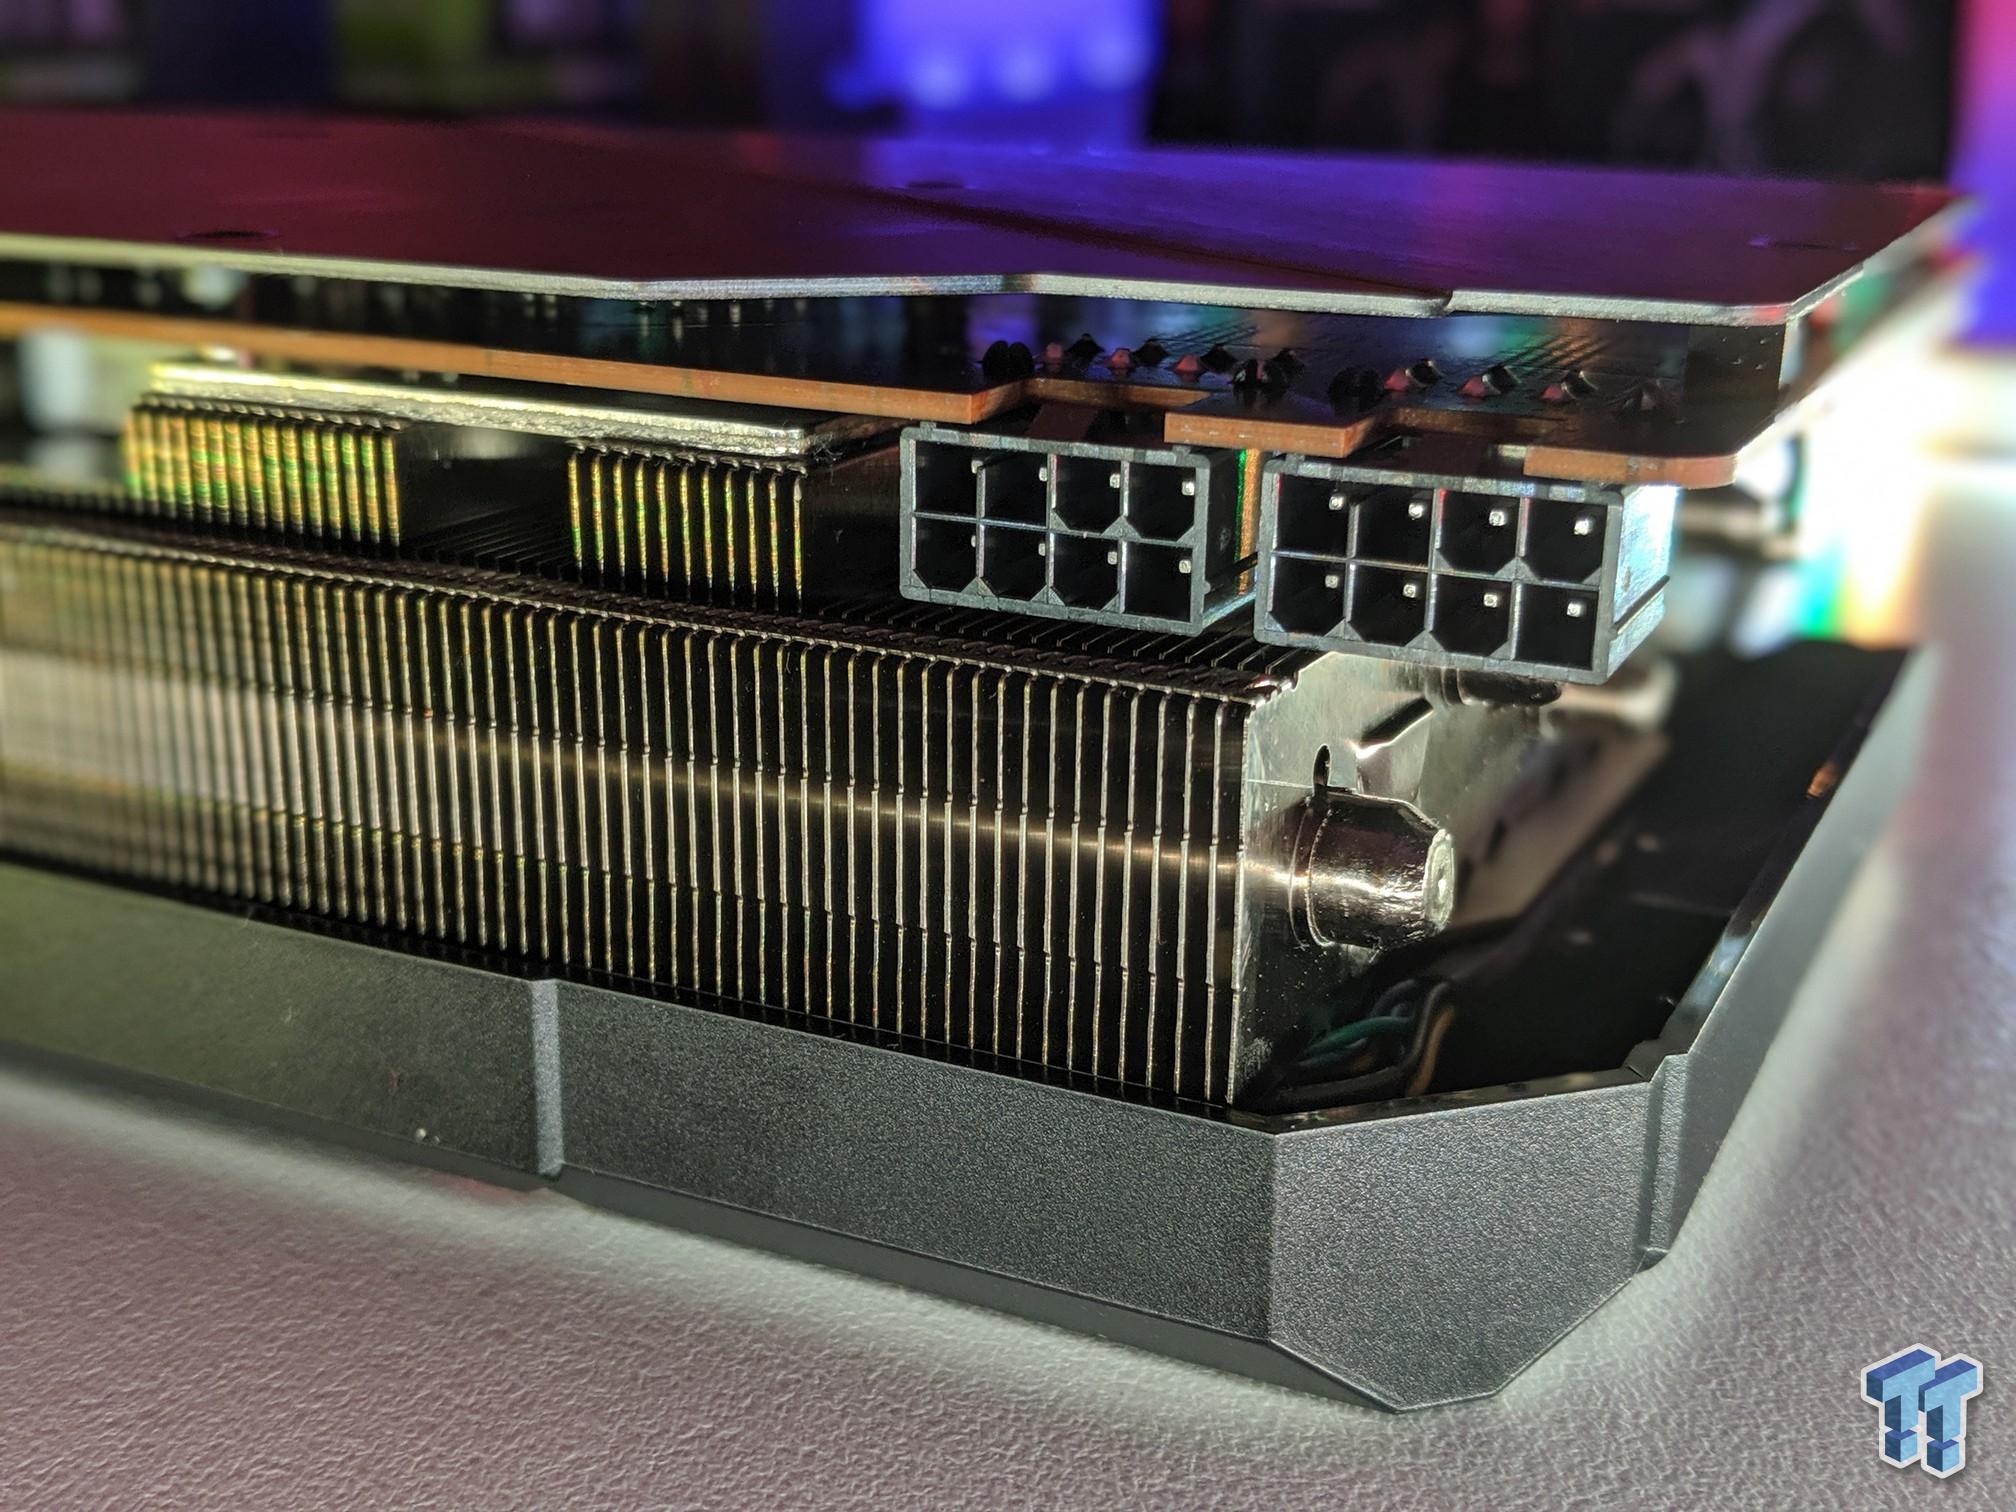 MSI Radeon RX 5700 XT GAMING X Review